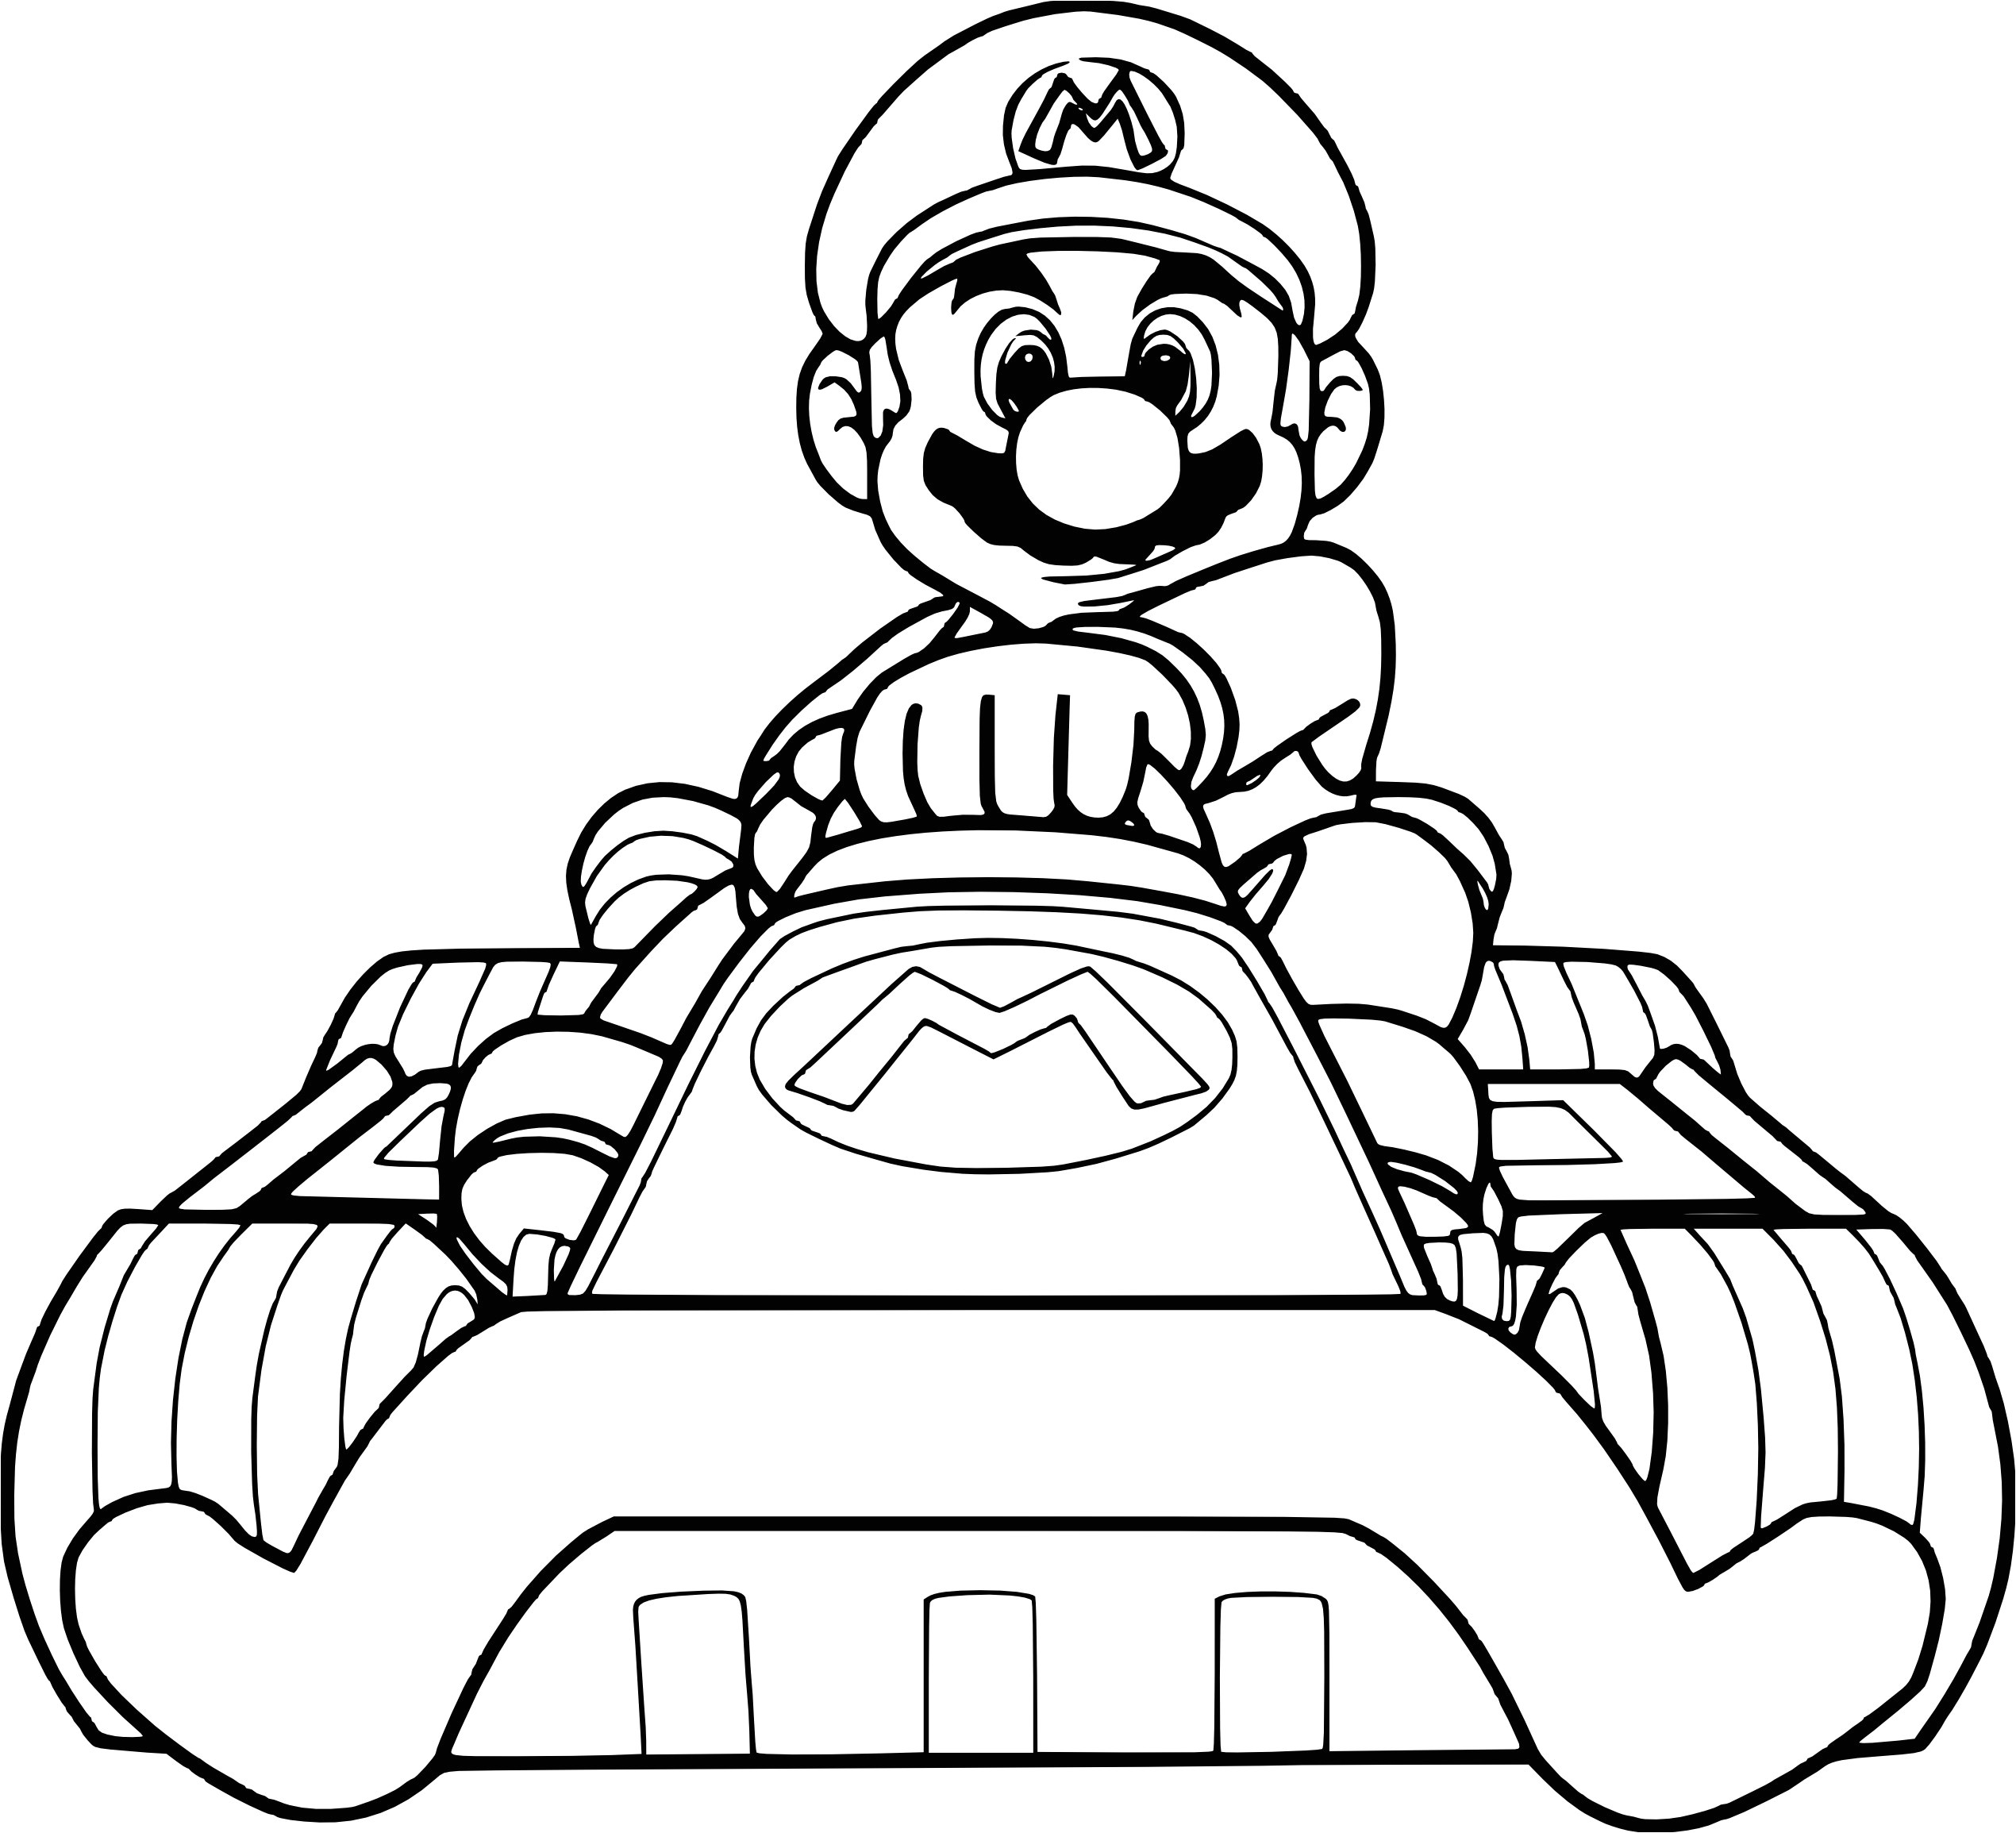 Coloriage Mario Imprimer Fresh C3 80 Top Kart Architecture   Coloriage De Mario Et Luigi